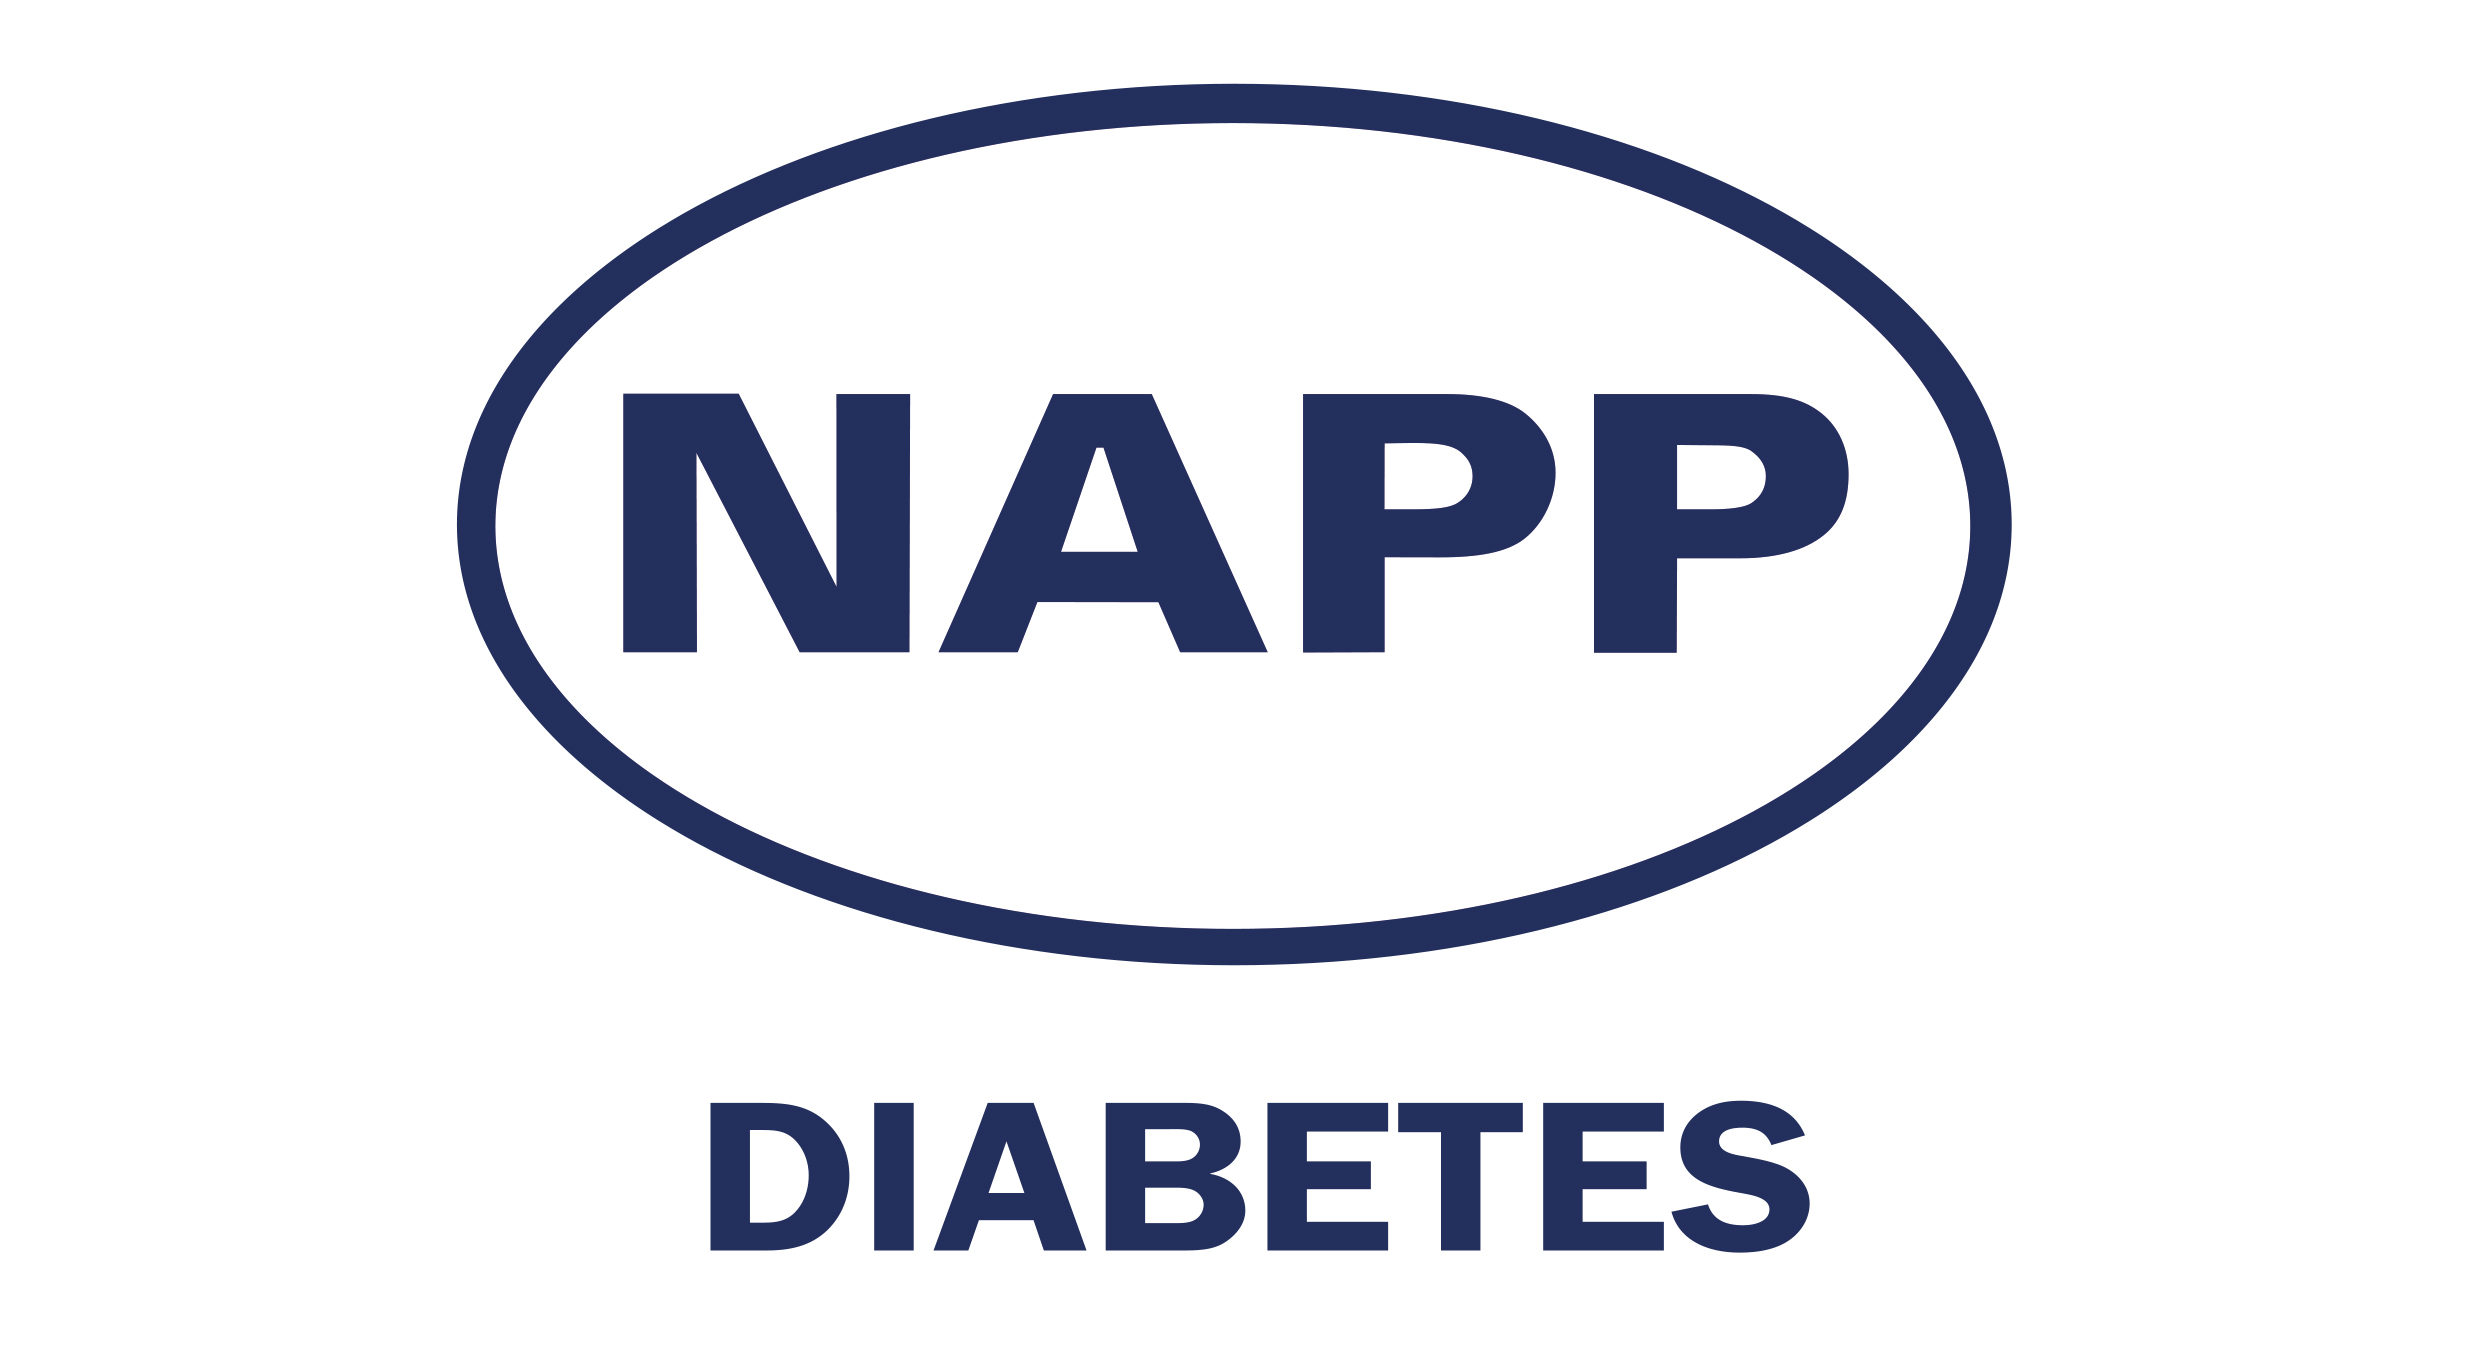 NAPP diabetes